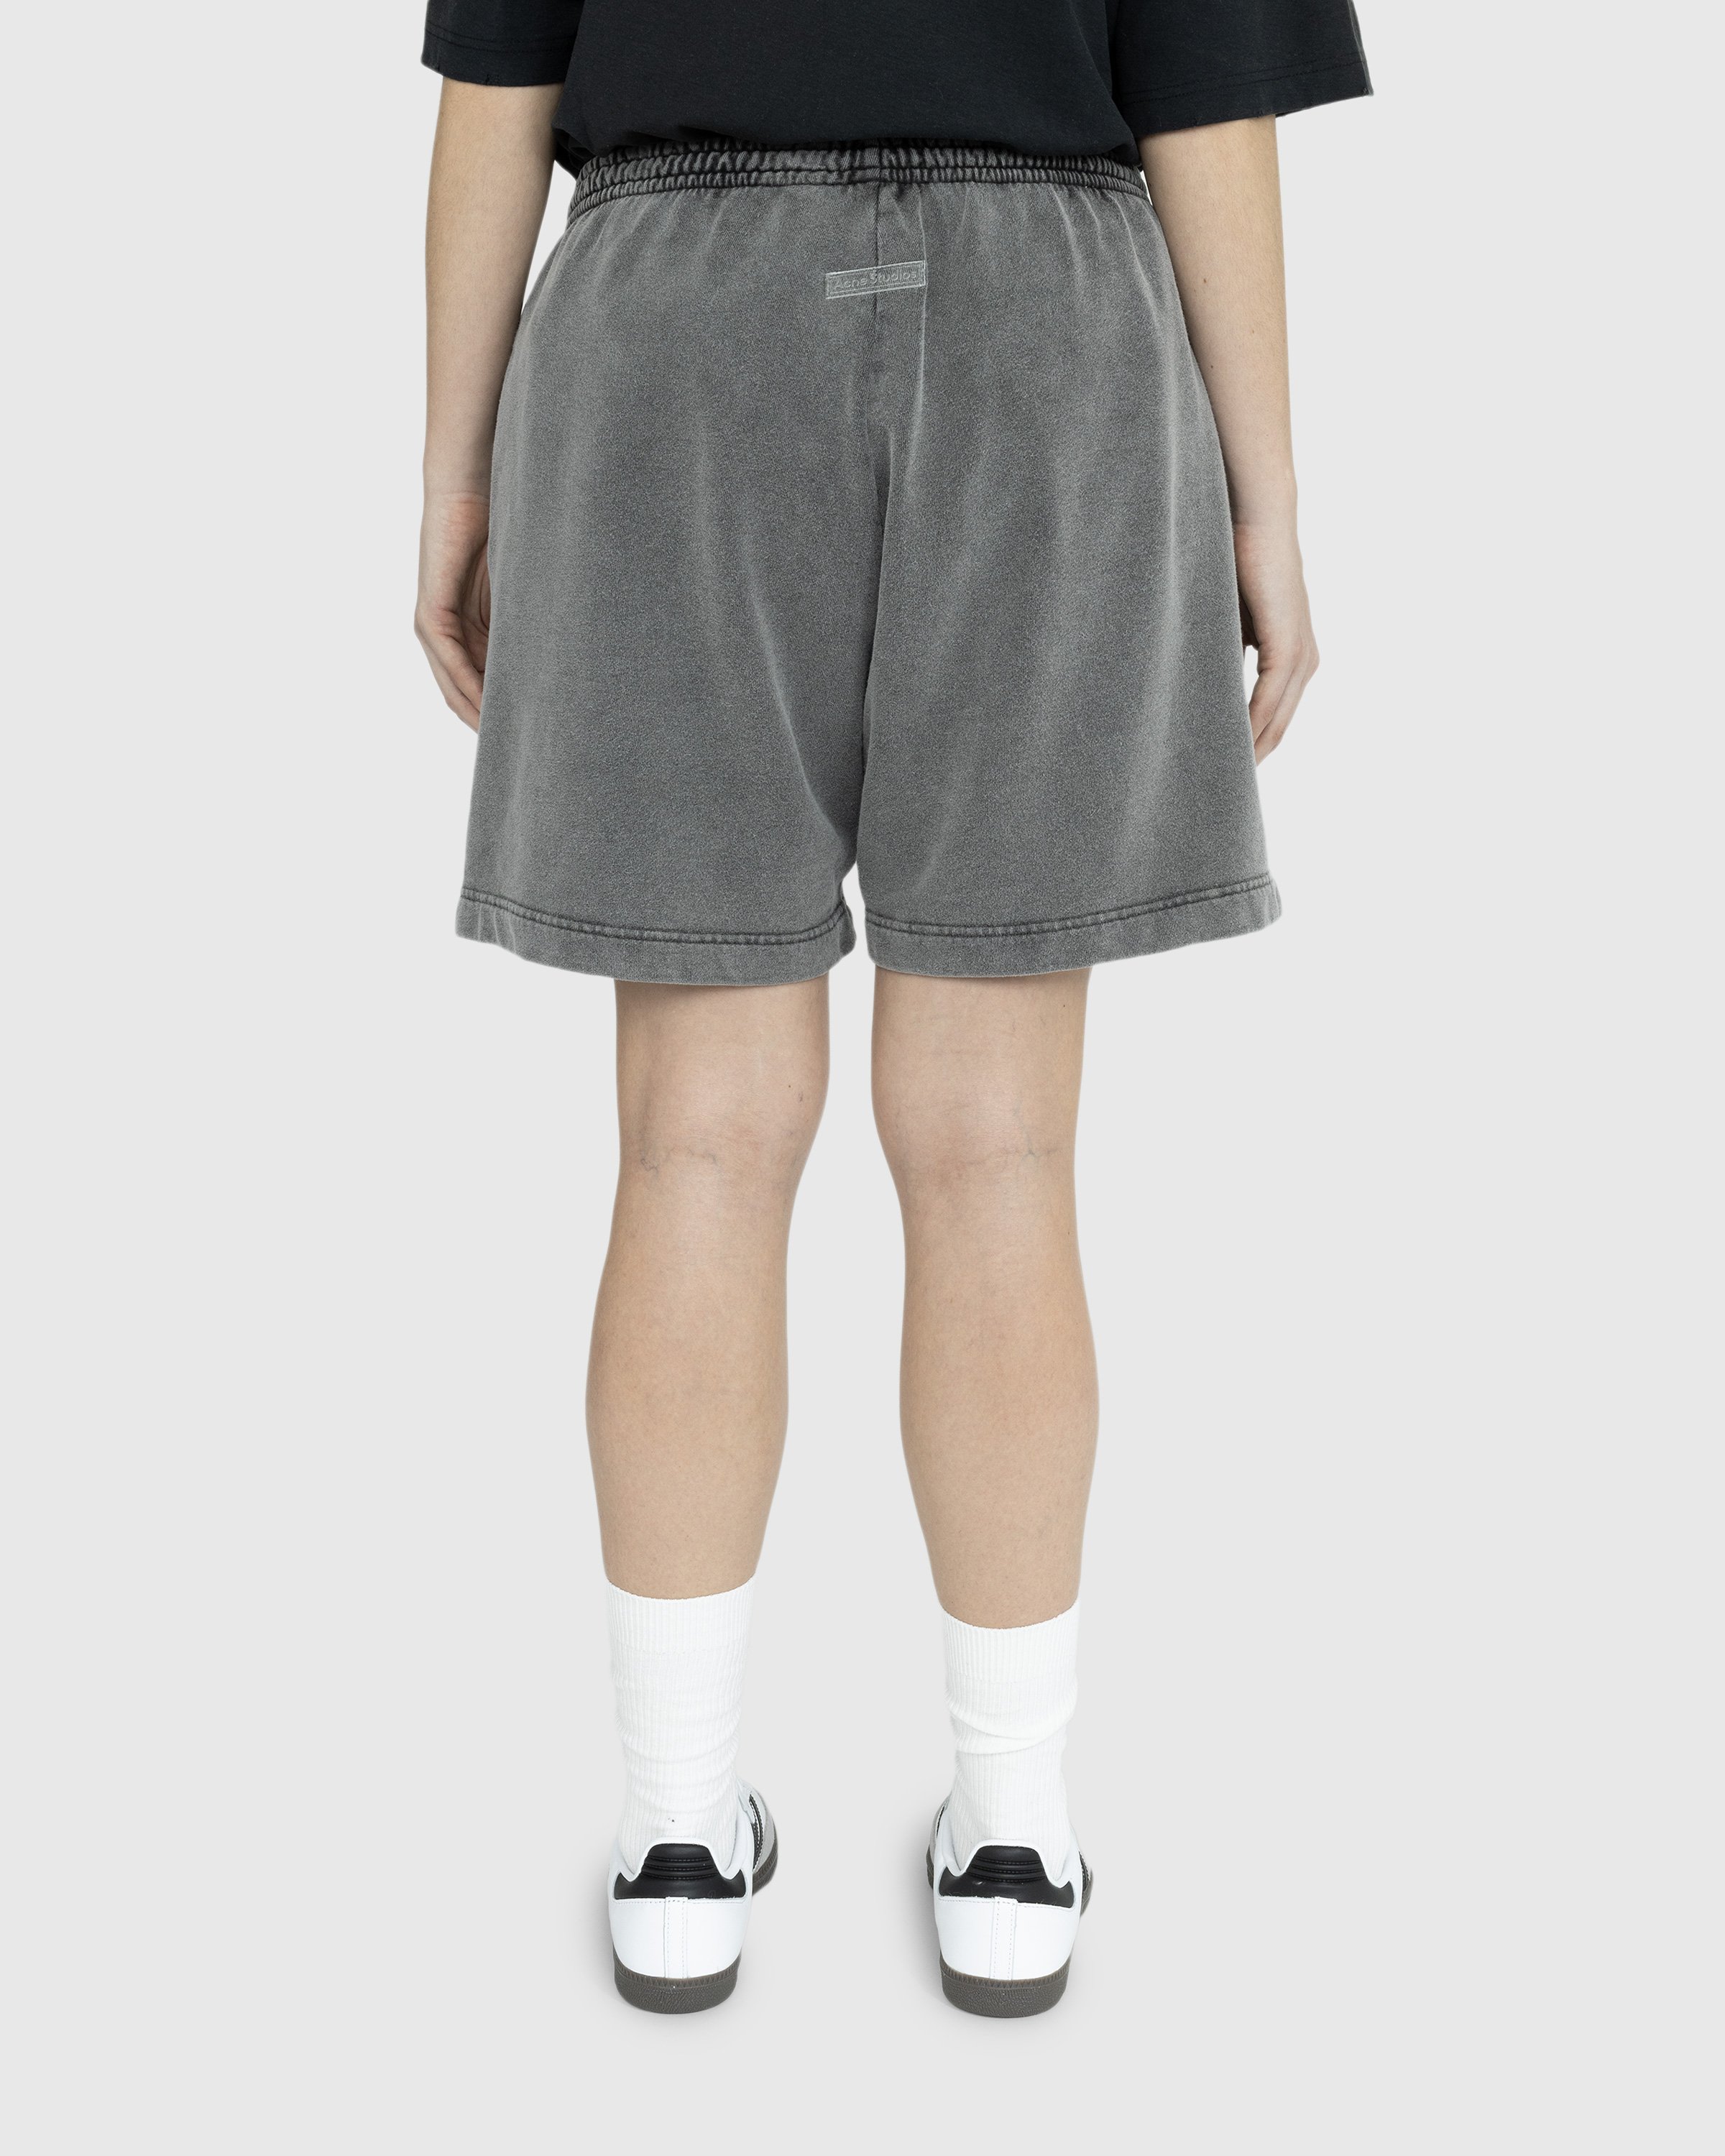 Acne Studios - Cotton Shorts Faded Black - Clothing - Grey - Image 3